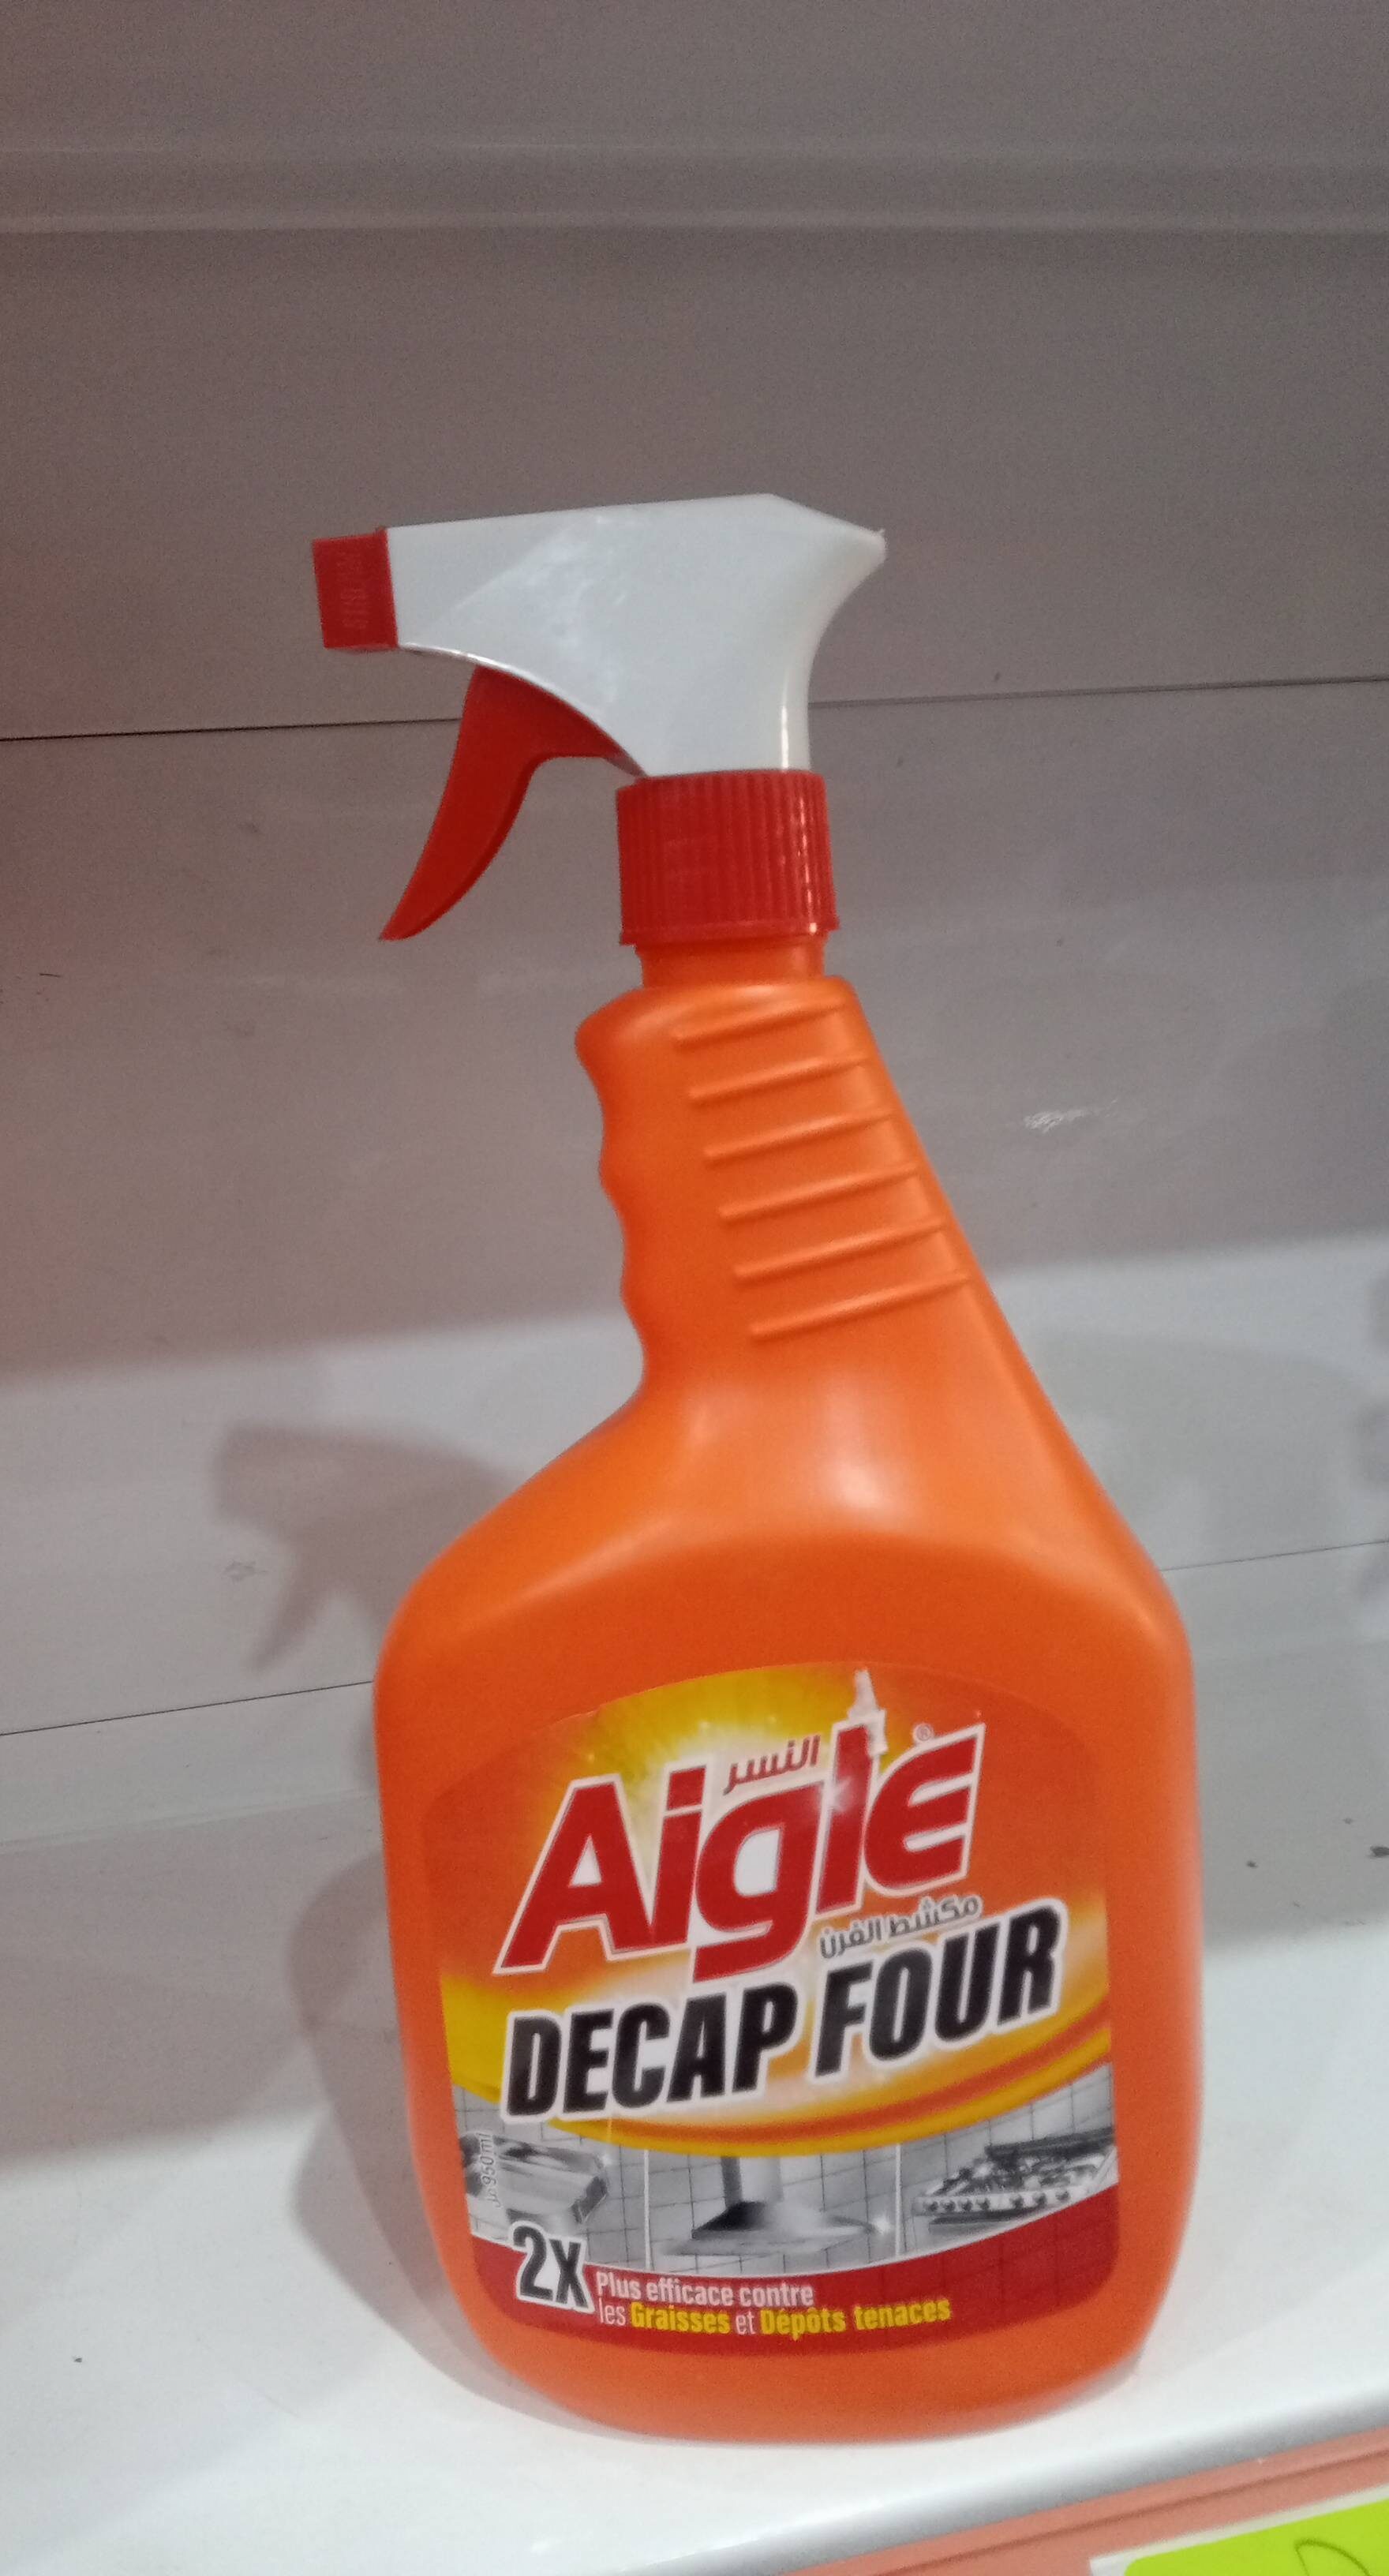 Aigle _ decap four 950 ml - Product - fr